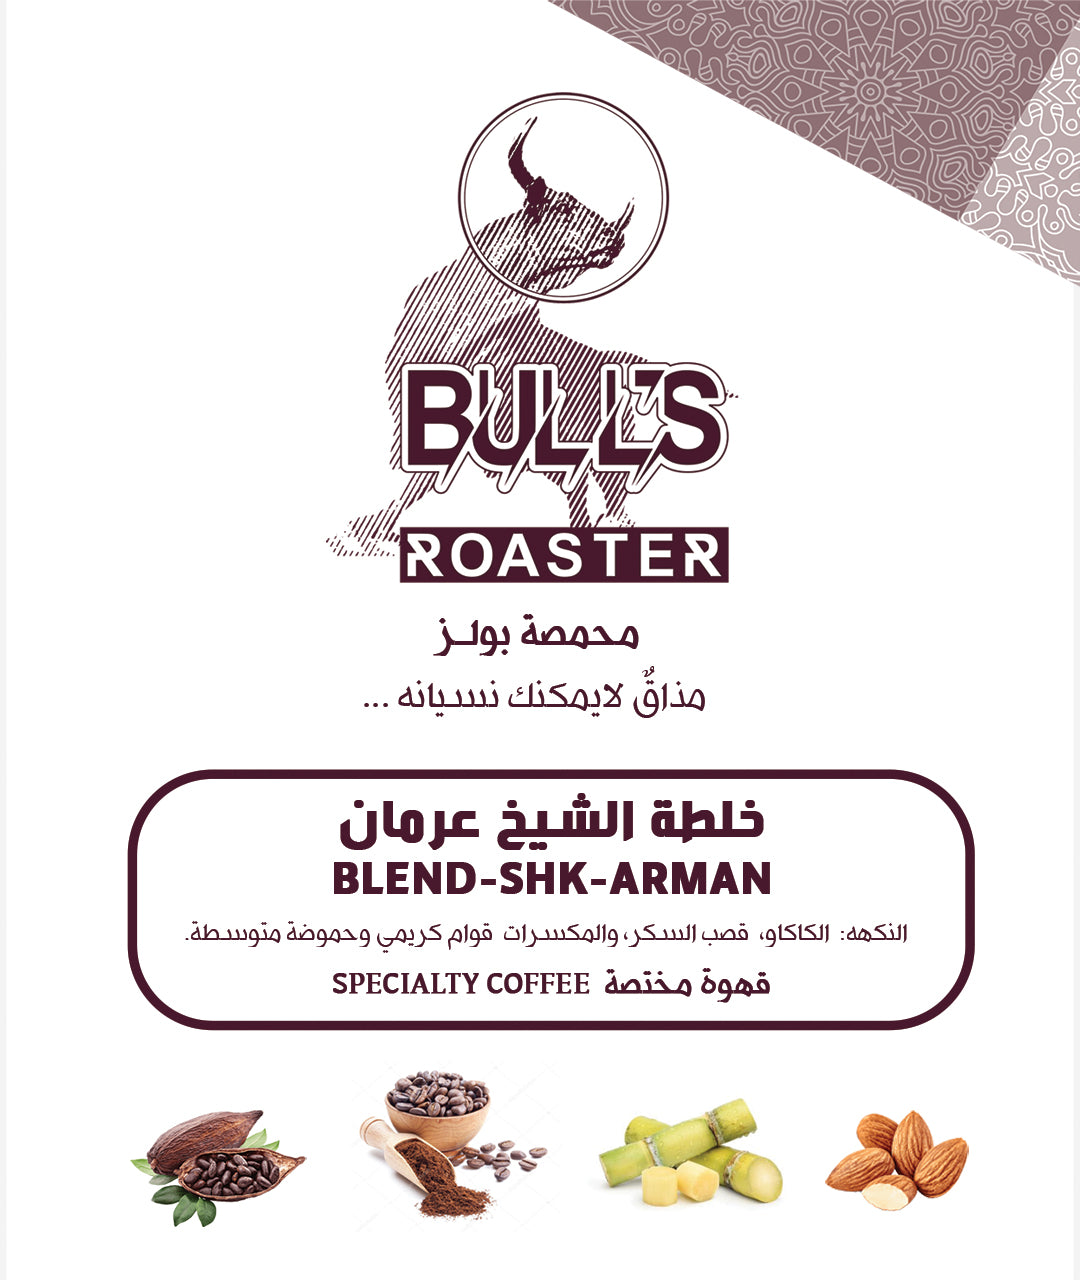 Skh Arman specialty coffee - Bull's Roastery